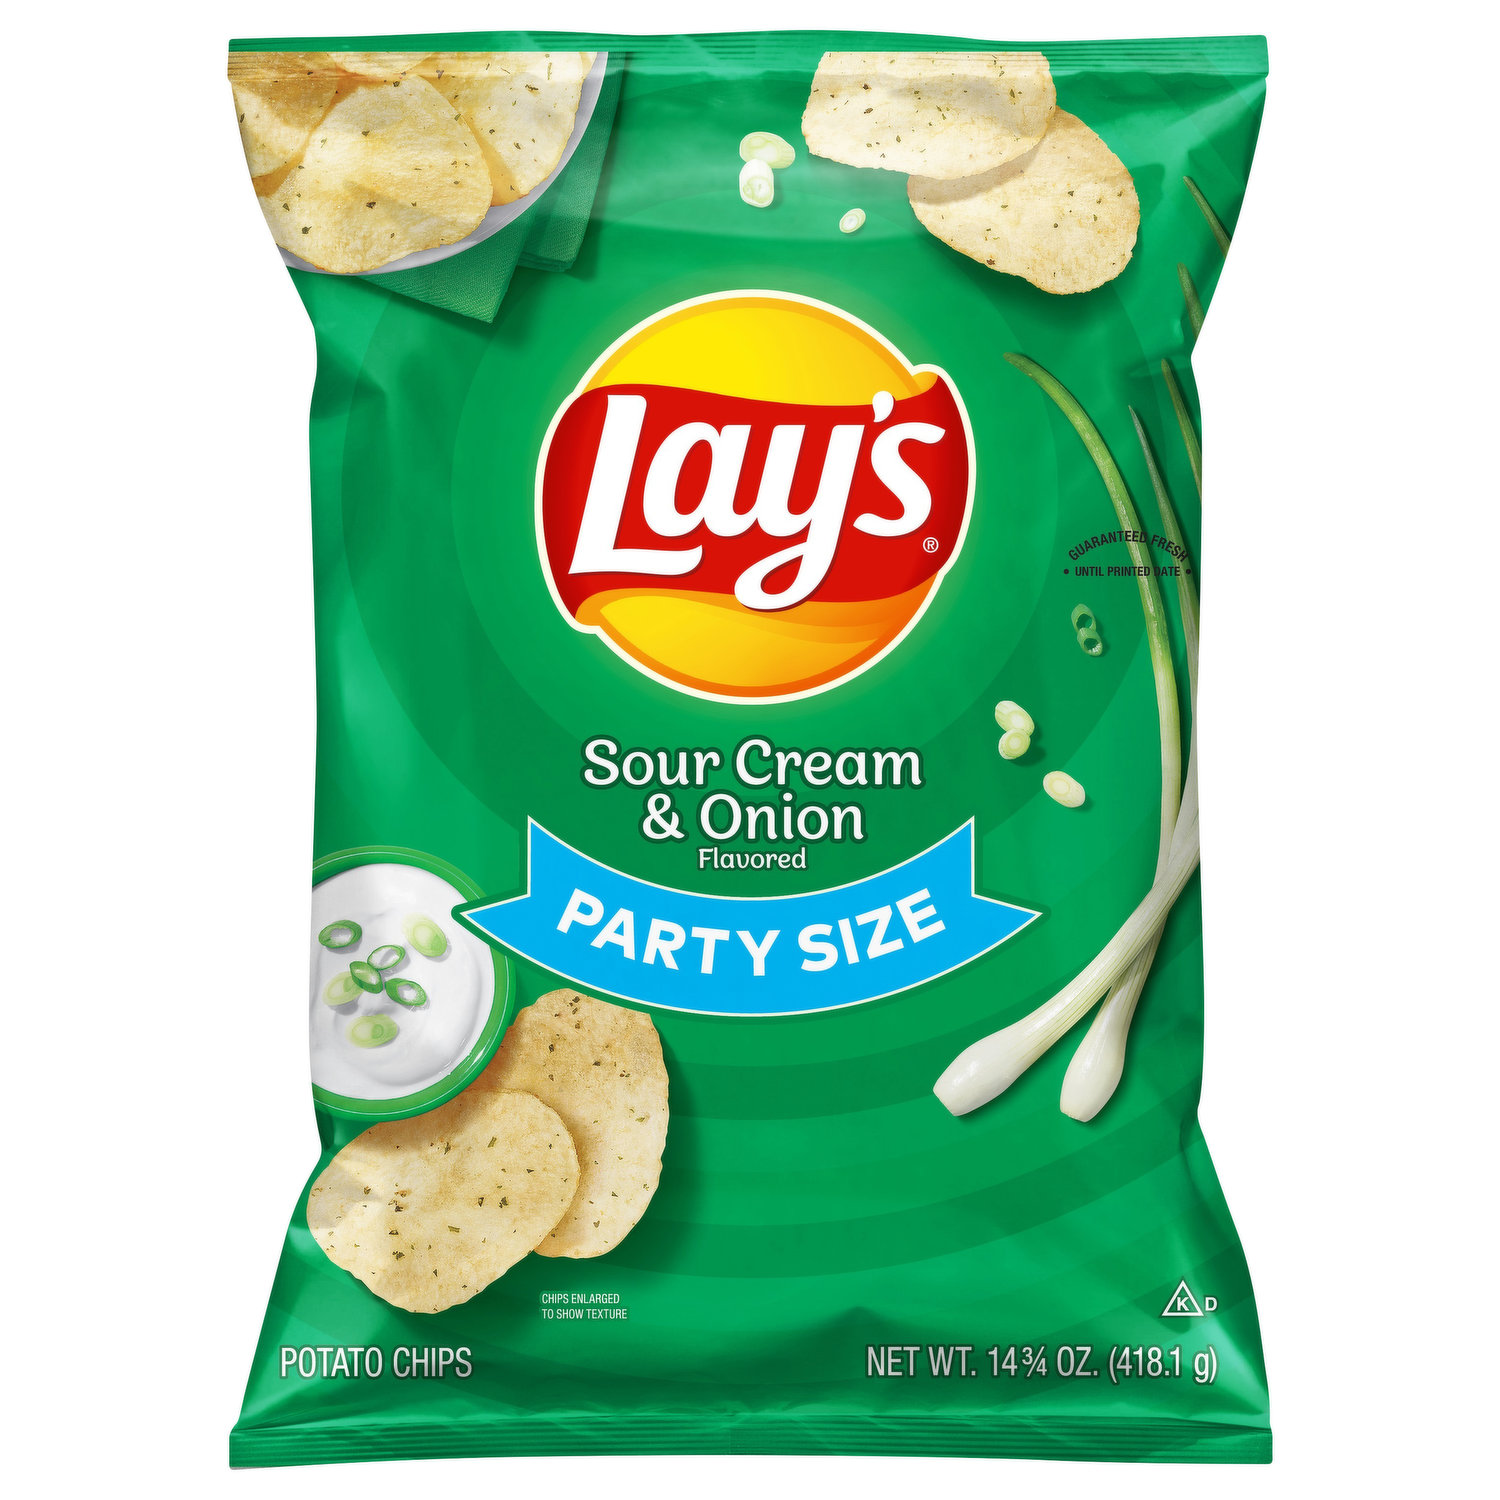 Lay's® Oven Baked Original Potato Crisps Gluten Free Snacks 6.25 oz. (12)